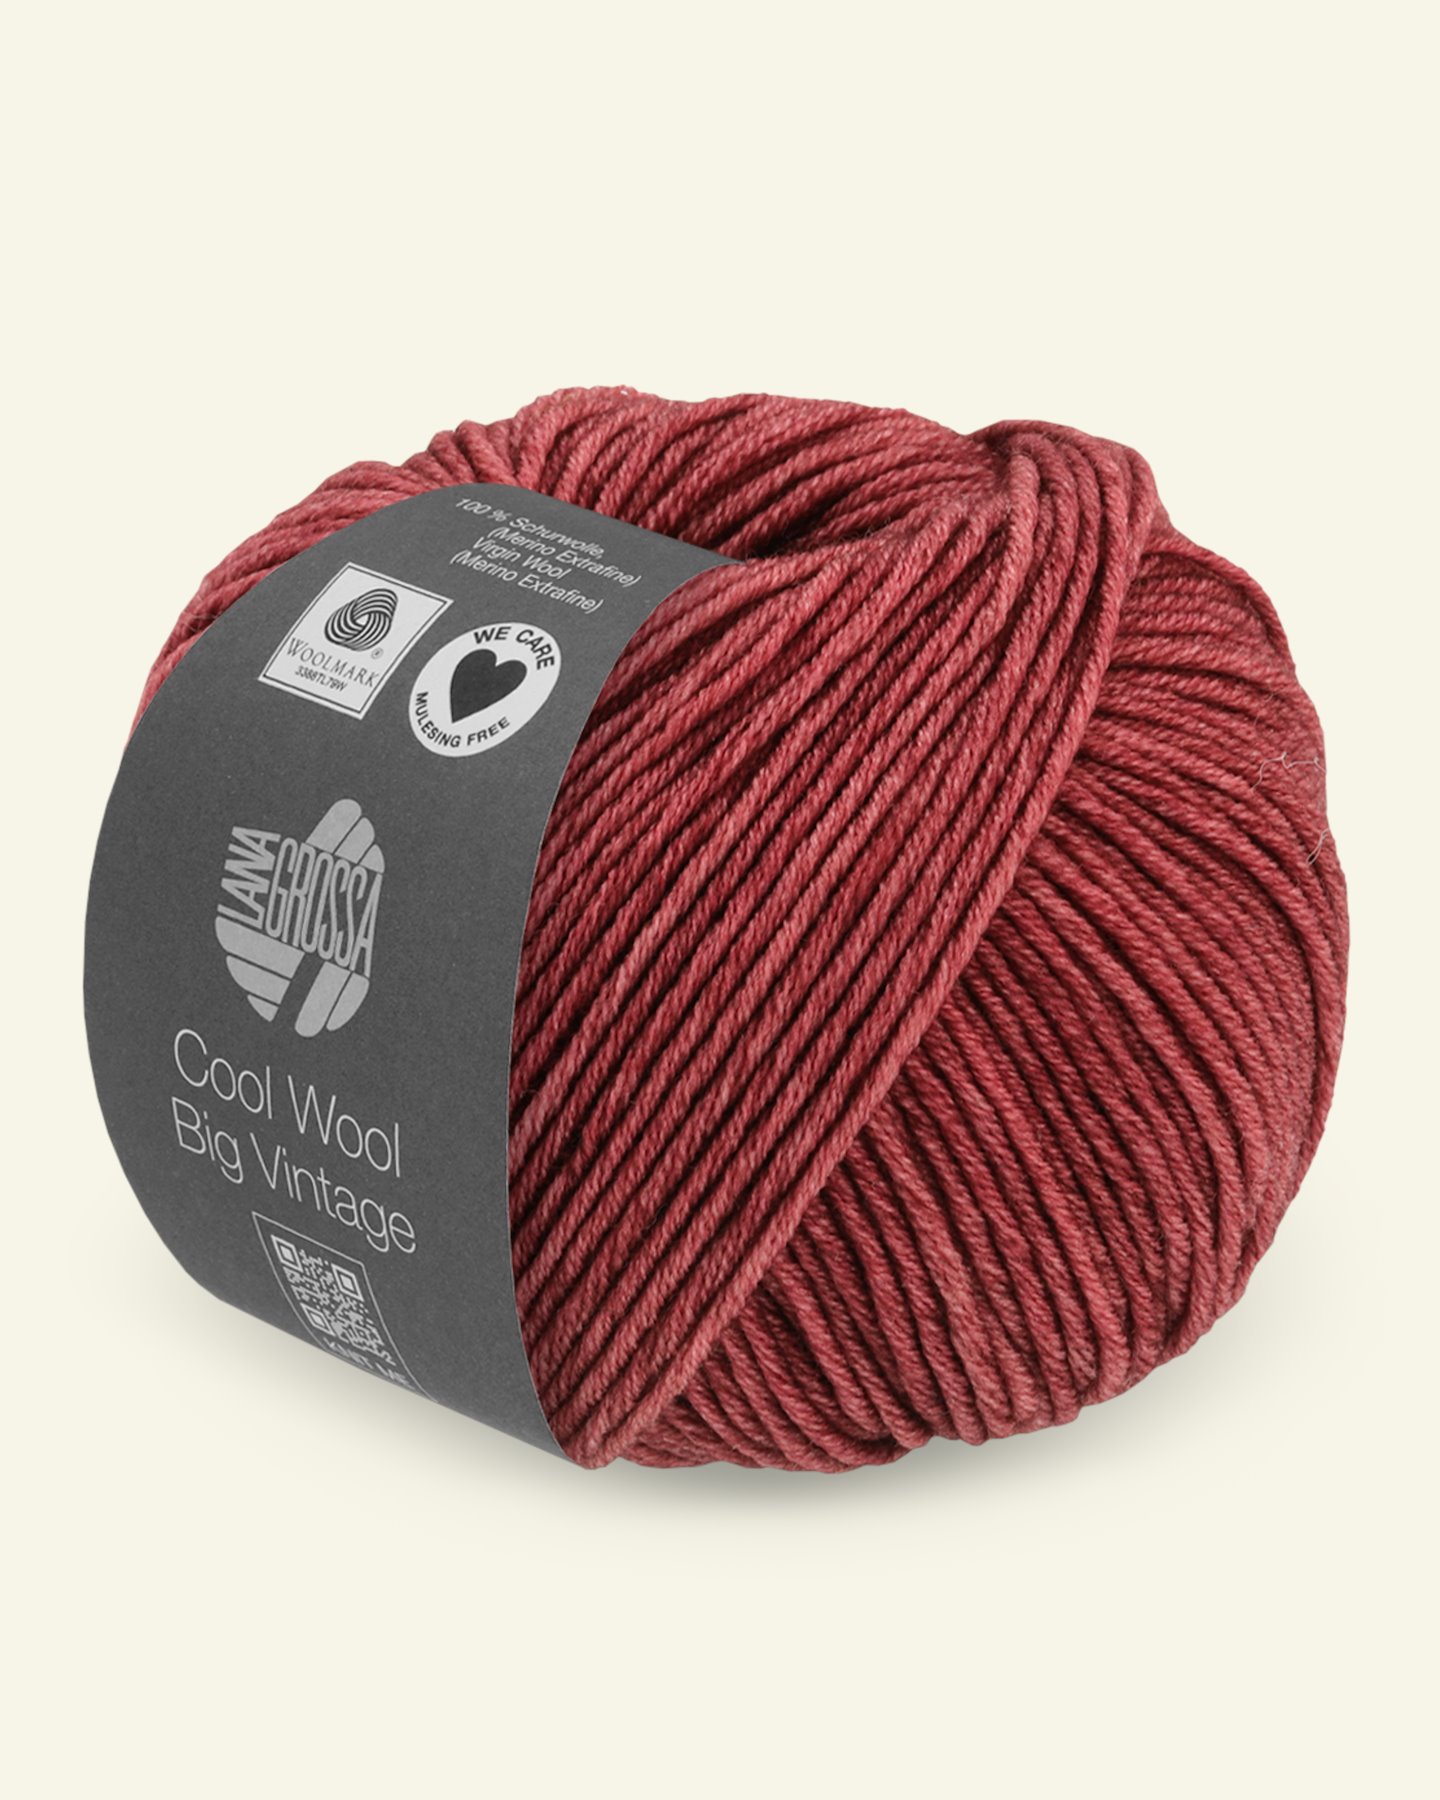 Lana Grossa, extrafine merino wool yarn "Cool Wool Big Vintage", bordeaux 90001068_pack